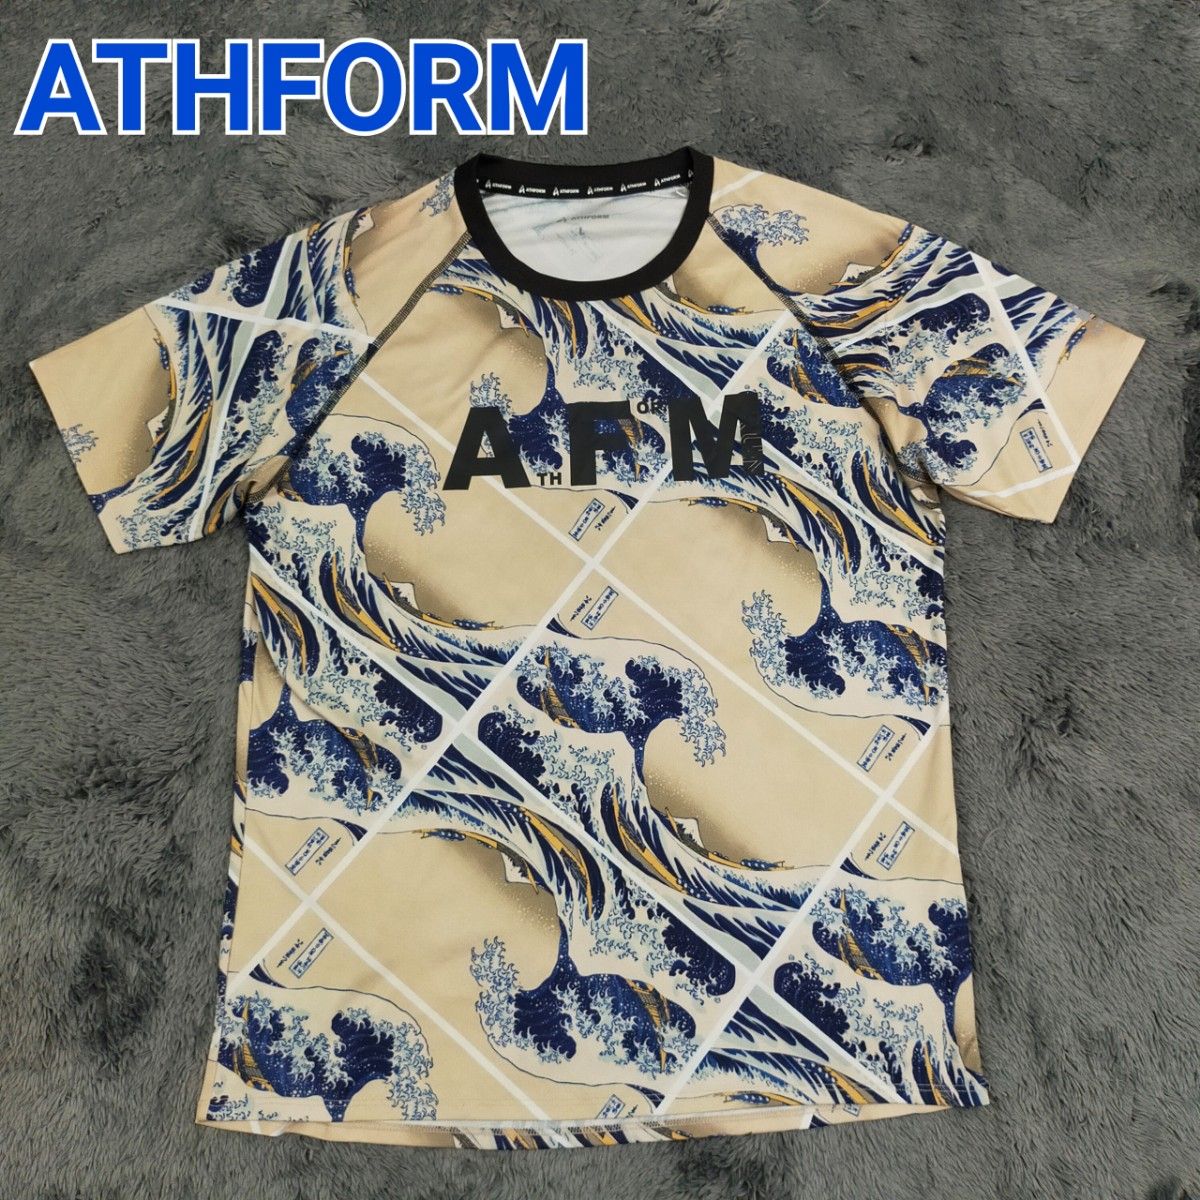 ATHFORM トレーニングシャツ ランニングシャツ 半袖 メンズ Lサイズ 総柄 和柄 ドライ ストレッチ 